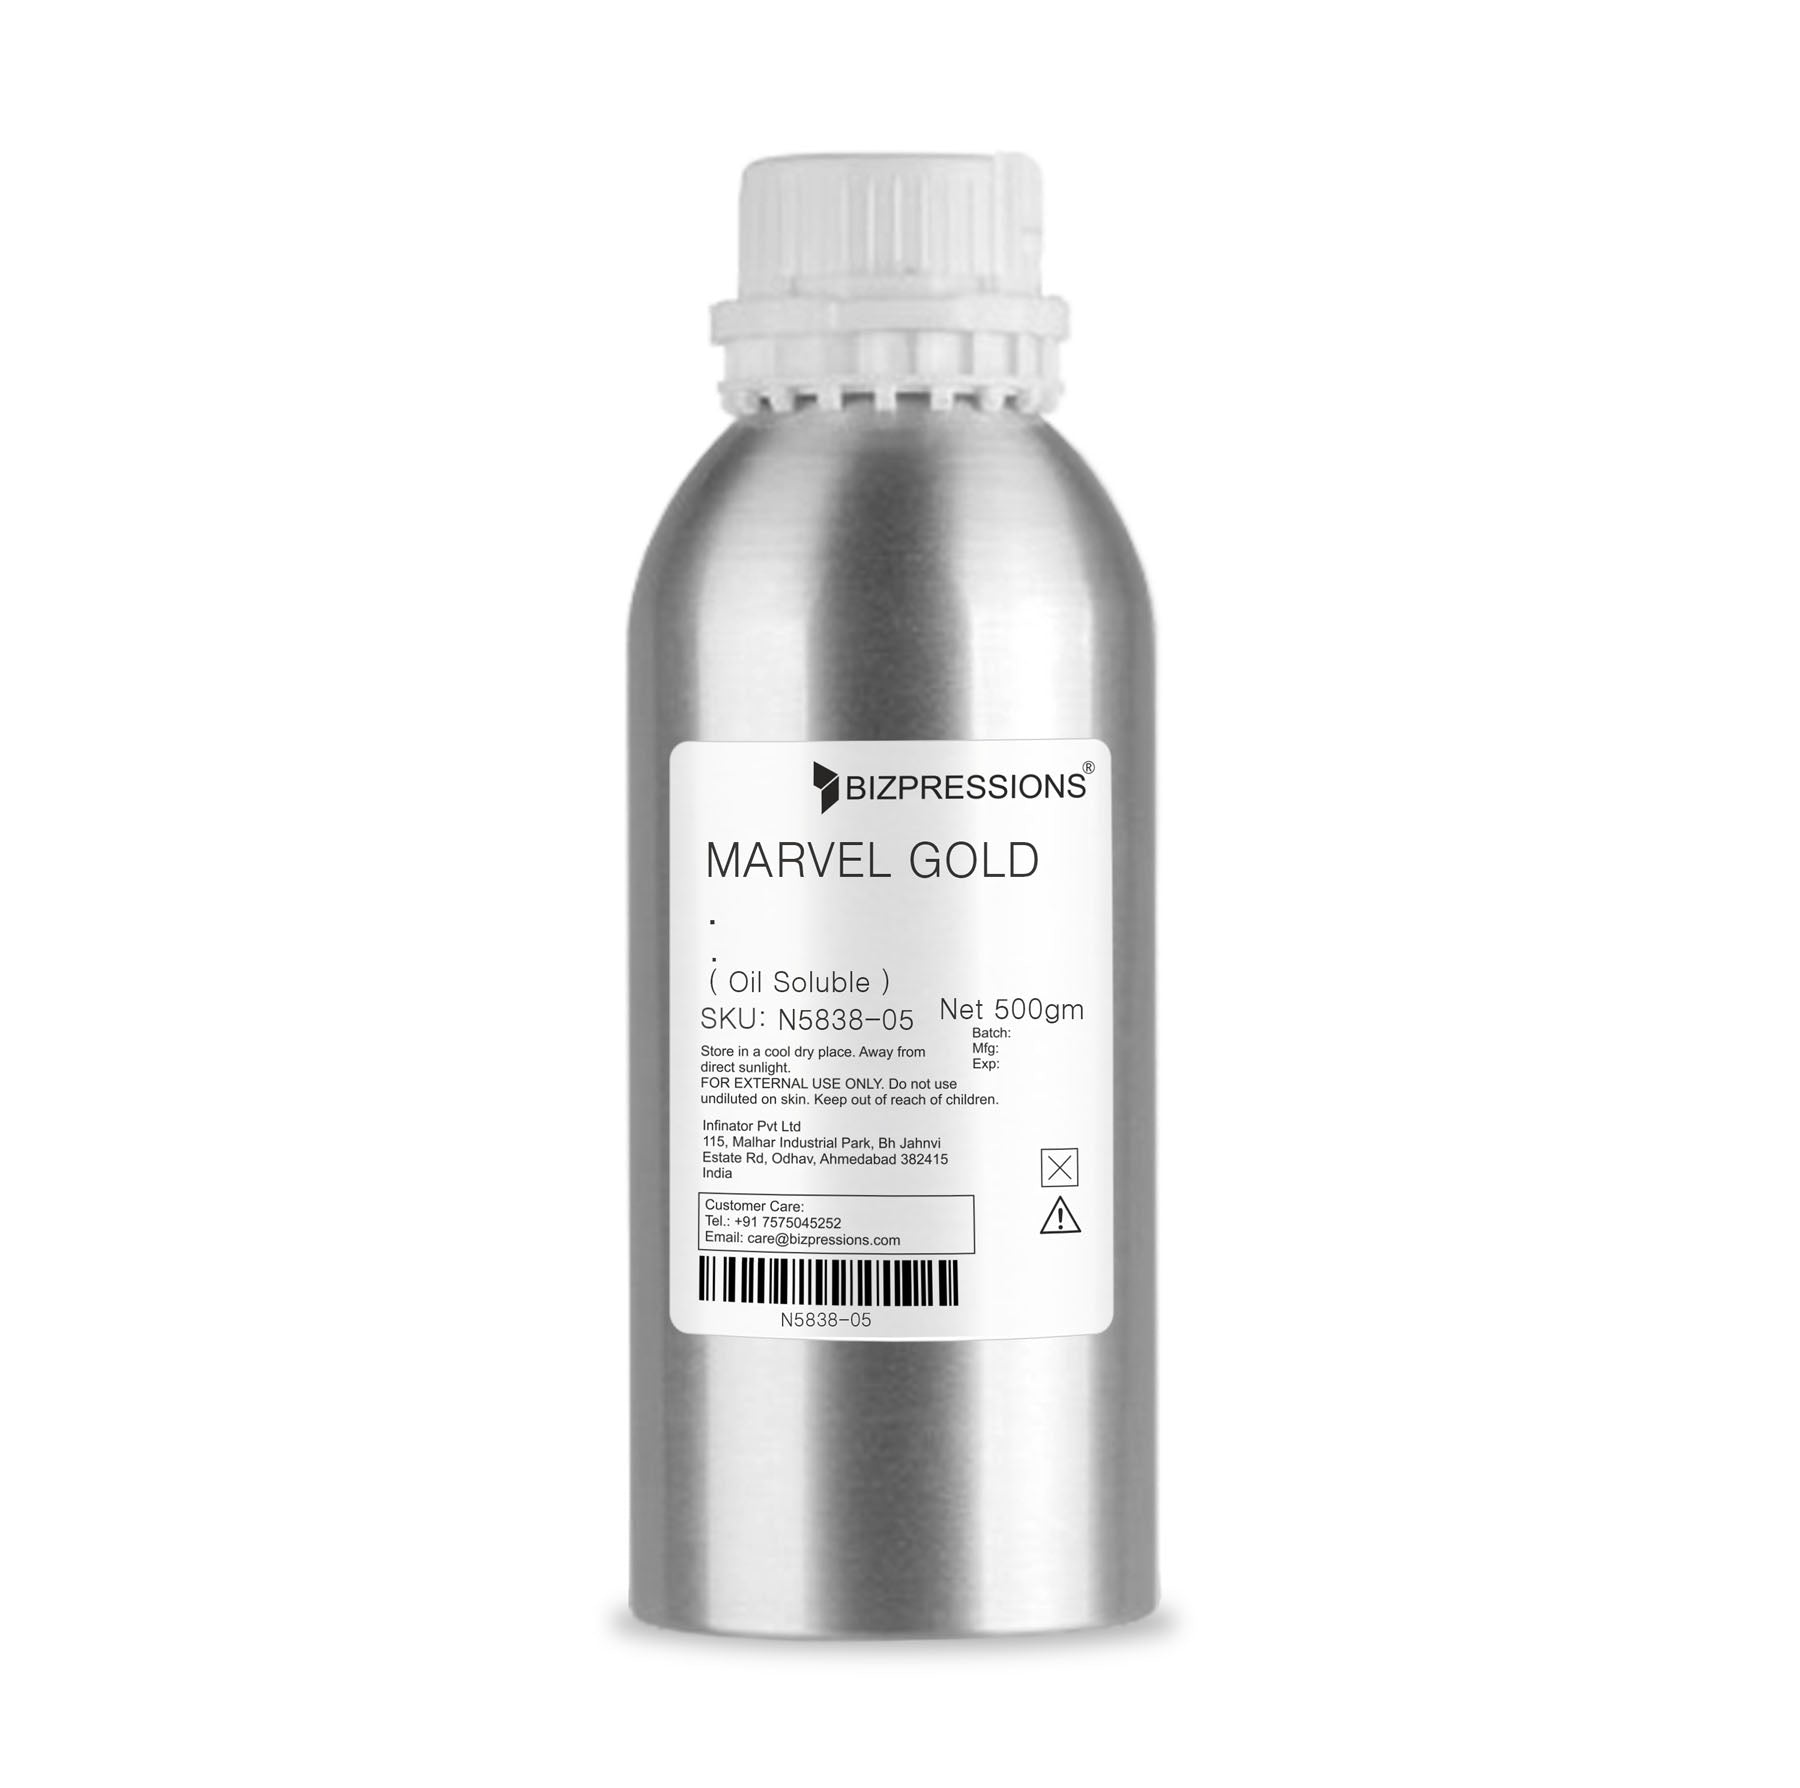 MARVEL GOLD - Fragrance ( Oil Soluble ) - 500 gm